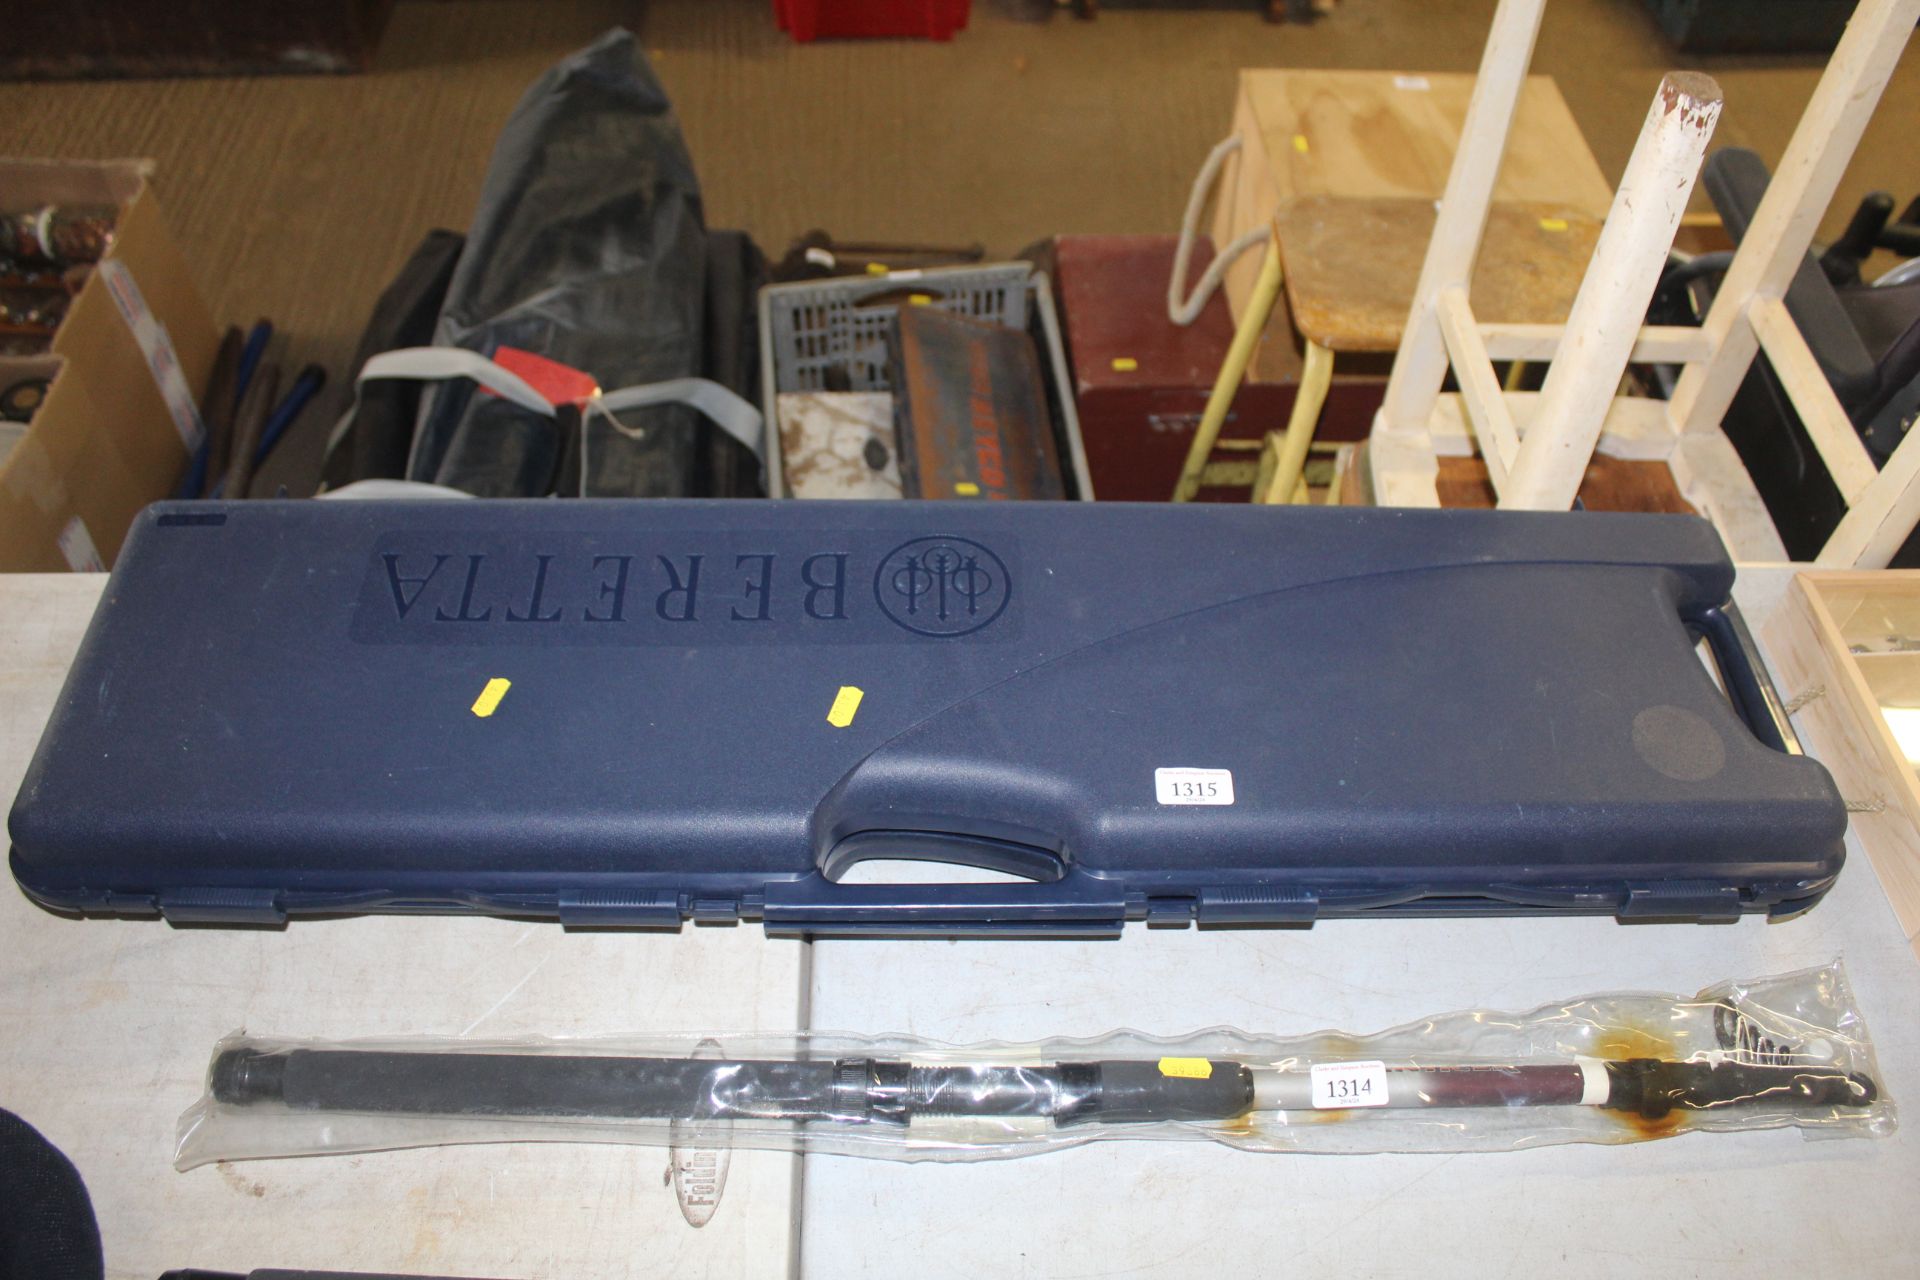 A Beretta shotgun carry case